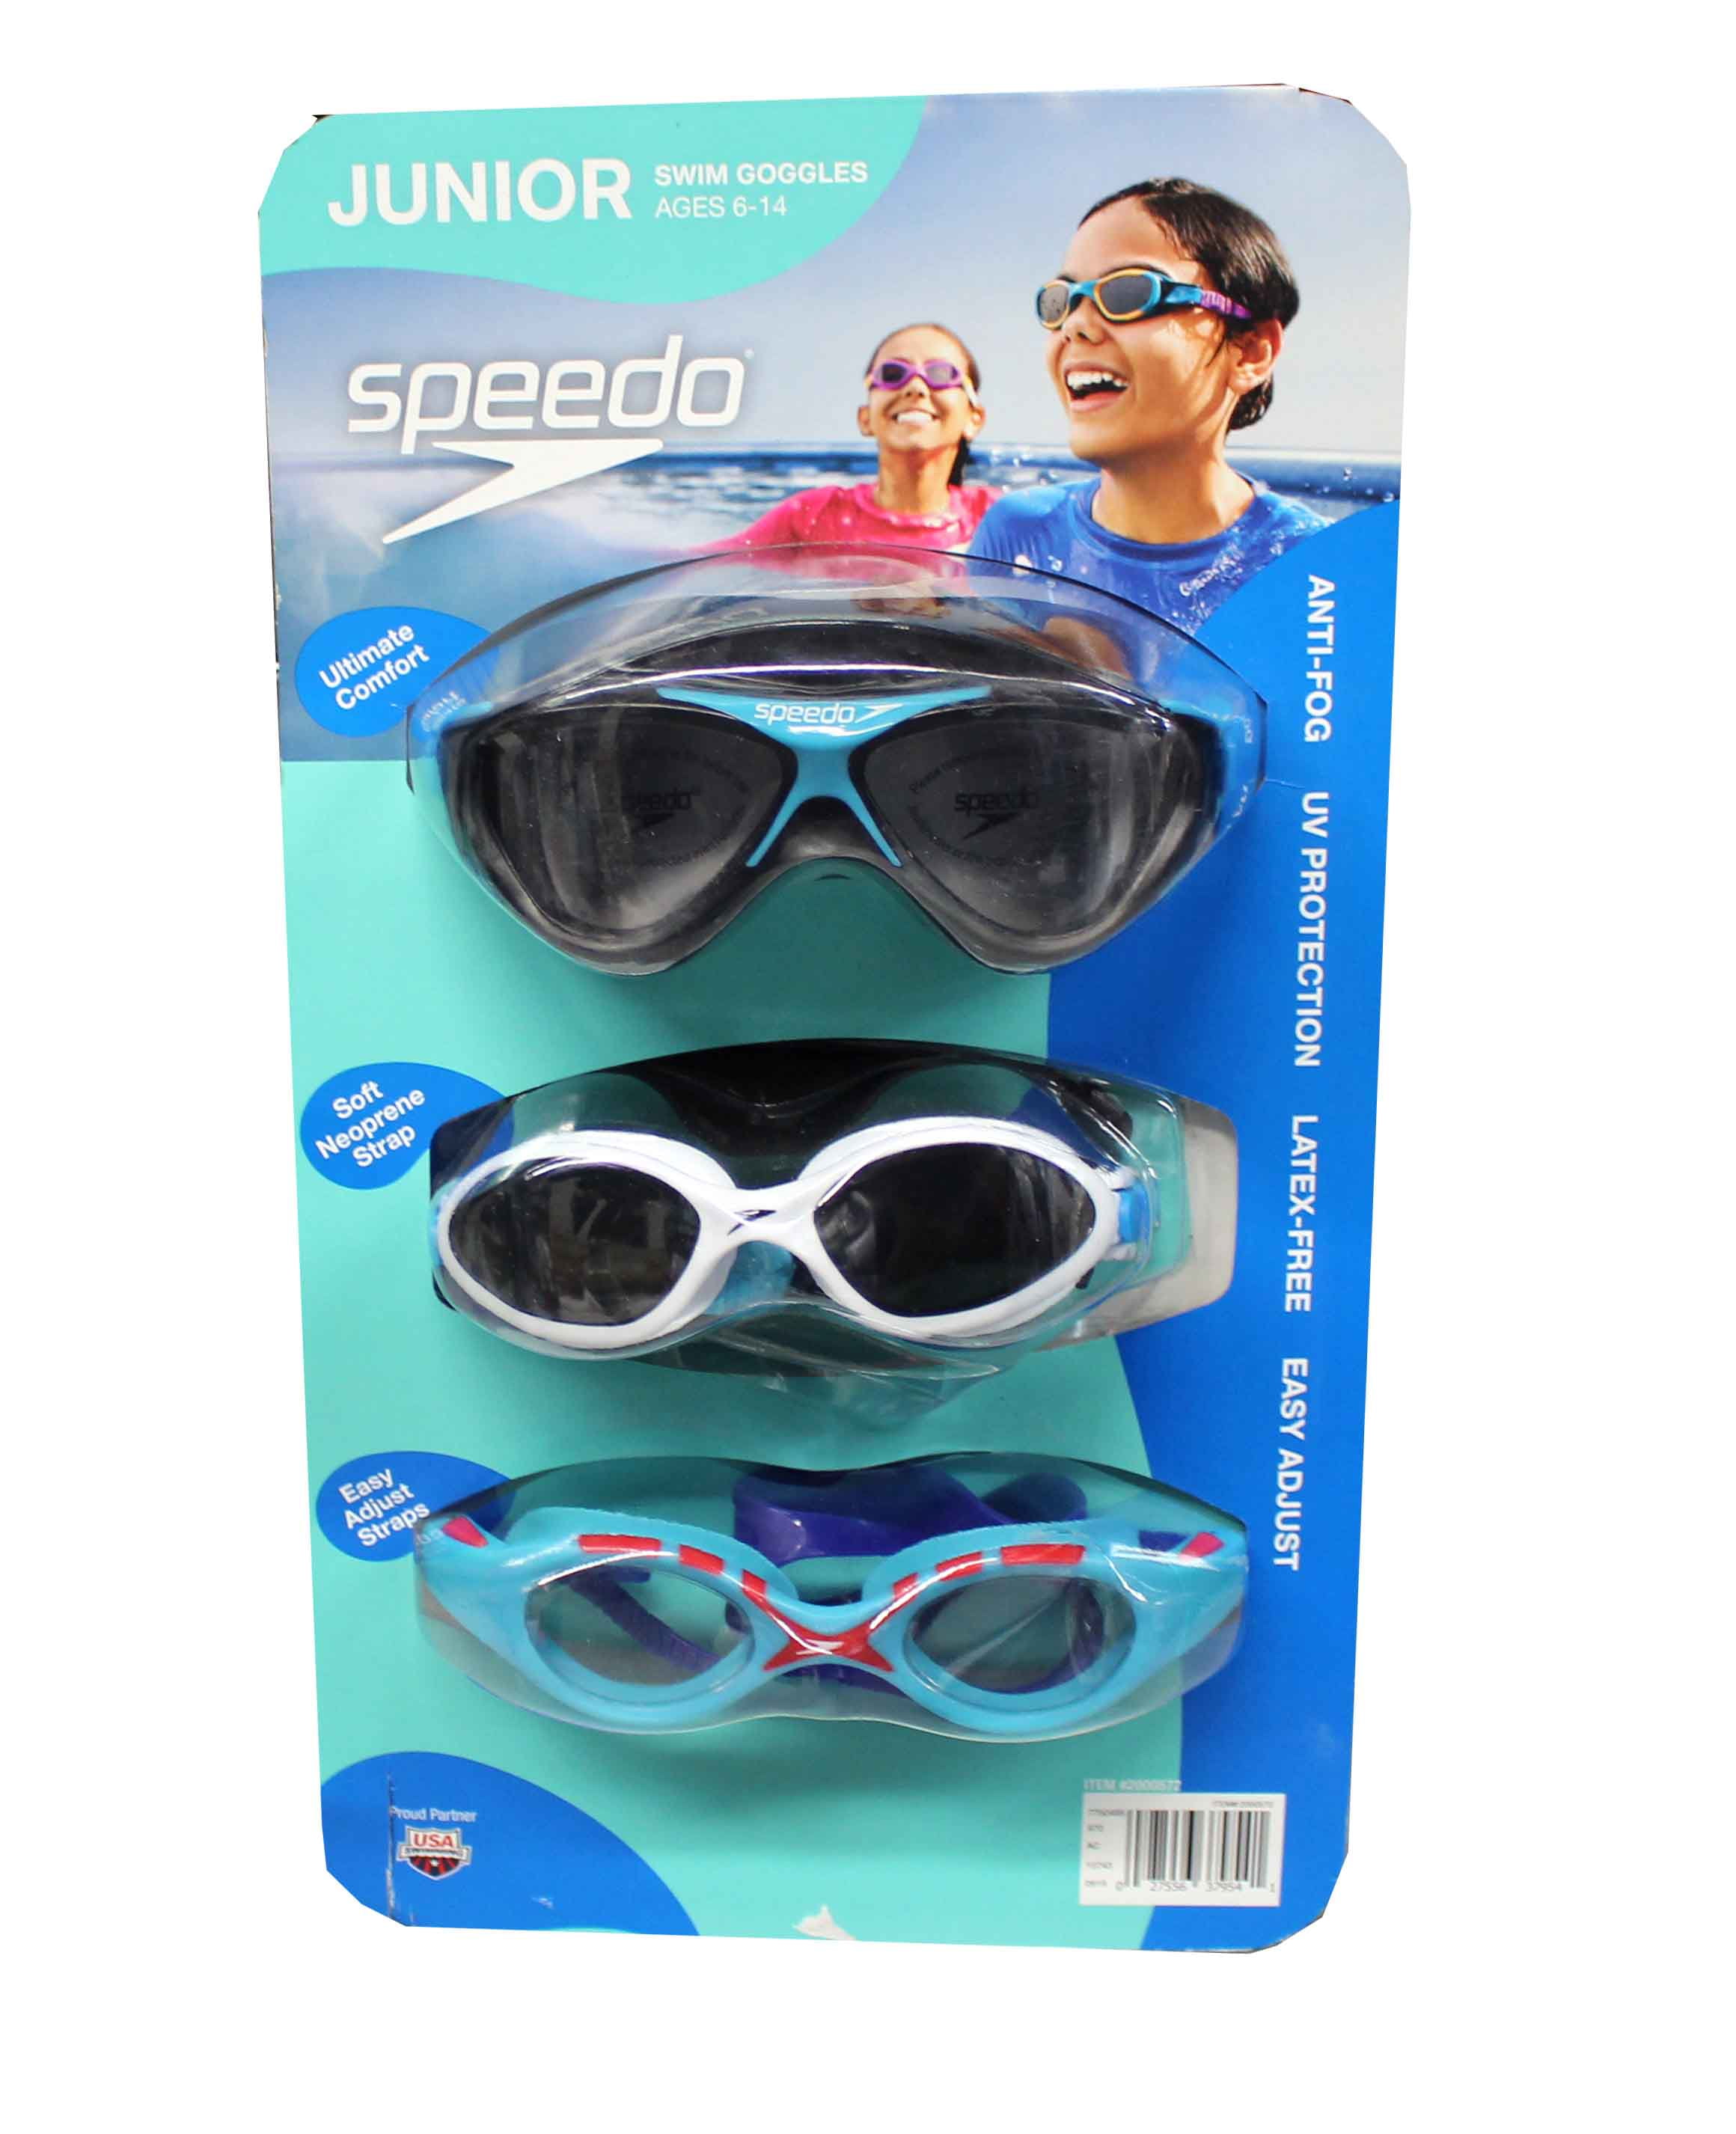 Speedo Marvel Spider Man Goggle Kids Sea Squad Spot Swimming Junior Swimmers New